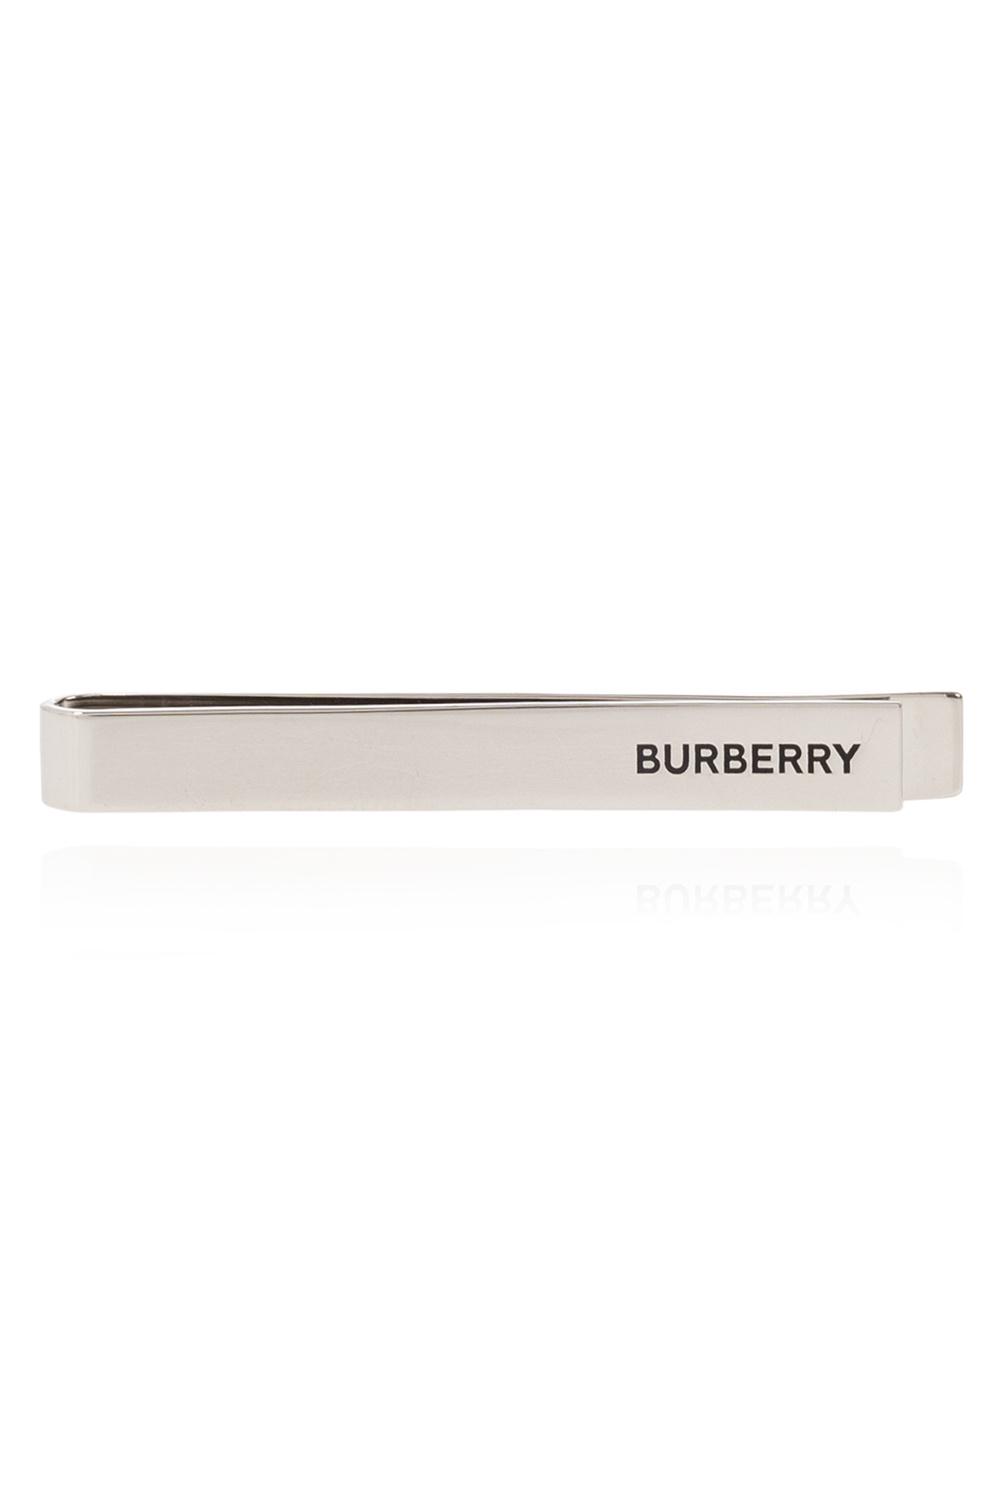 Burberry Brass Tie Clip in Silver (Metallic) for Men | Lyst